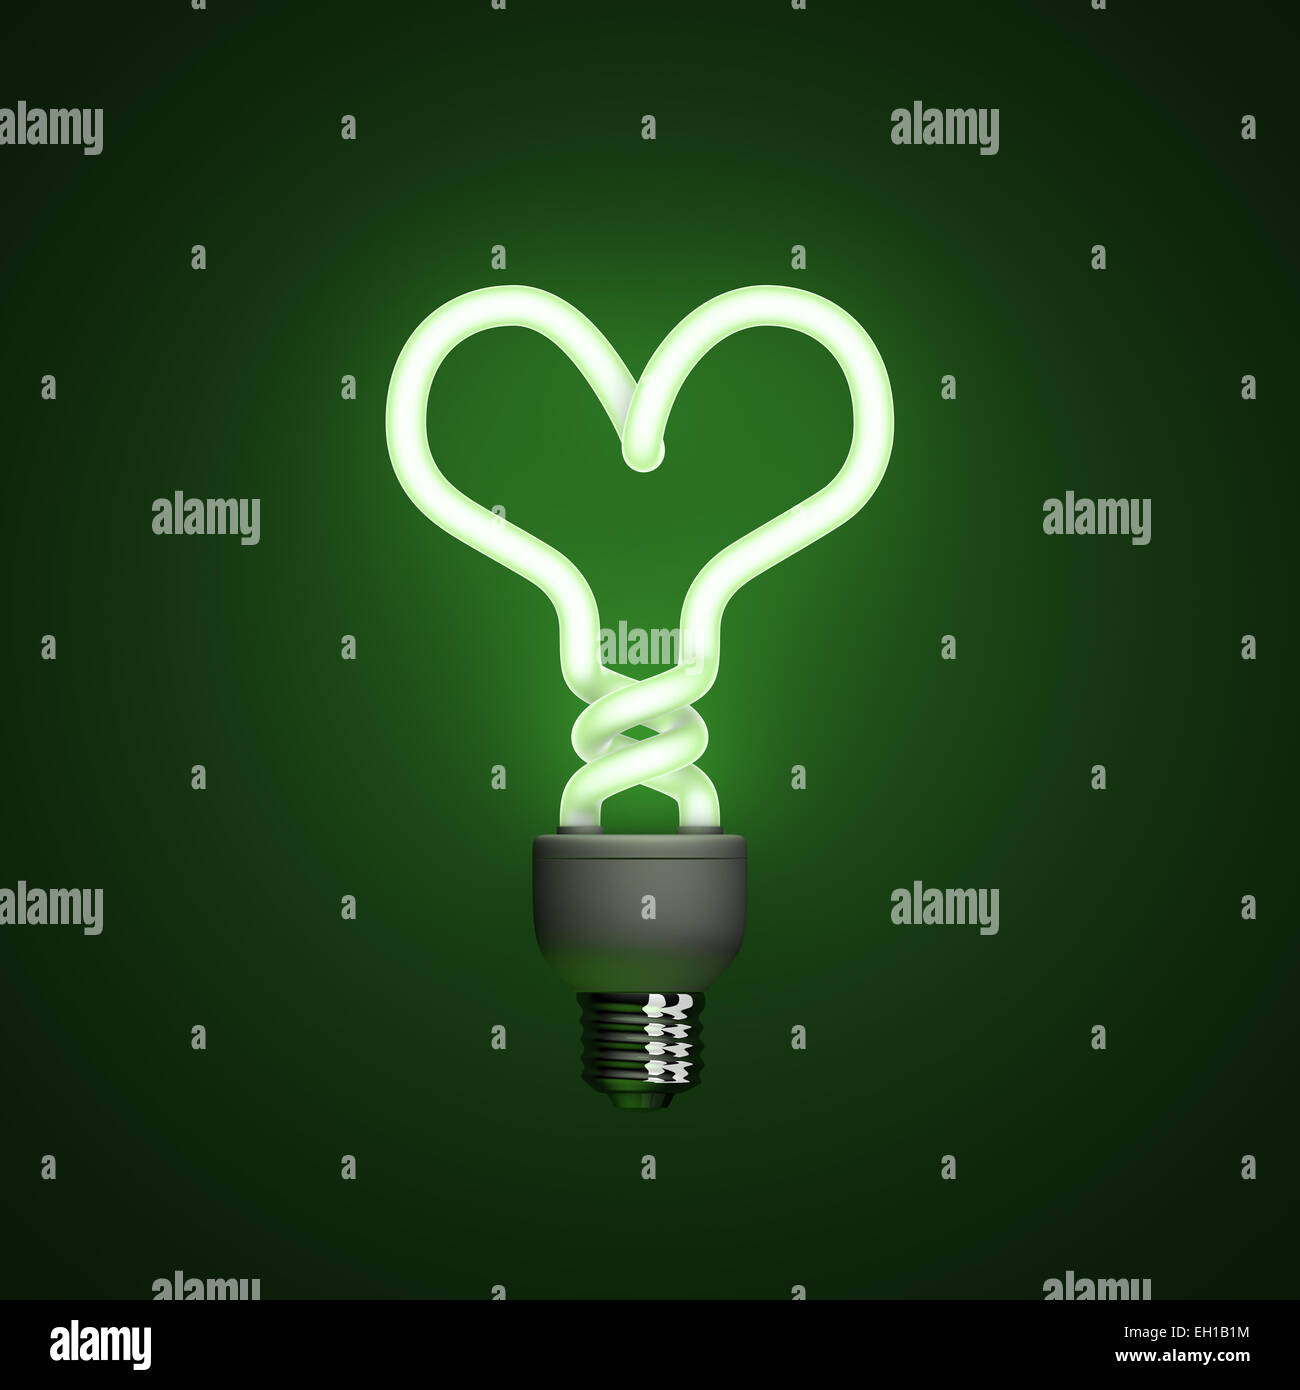 Energy saving compact fluorescent lightbulb, lamp on a green background with fine illumination Stock Photo